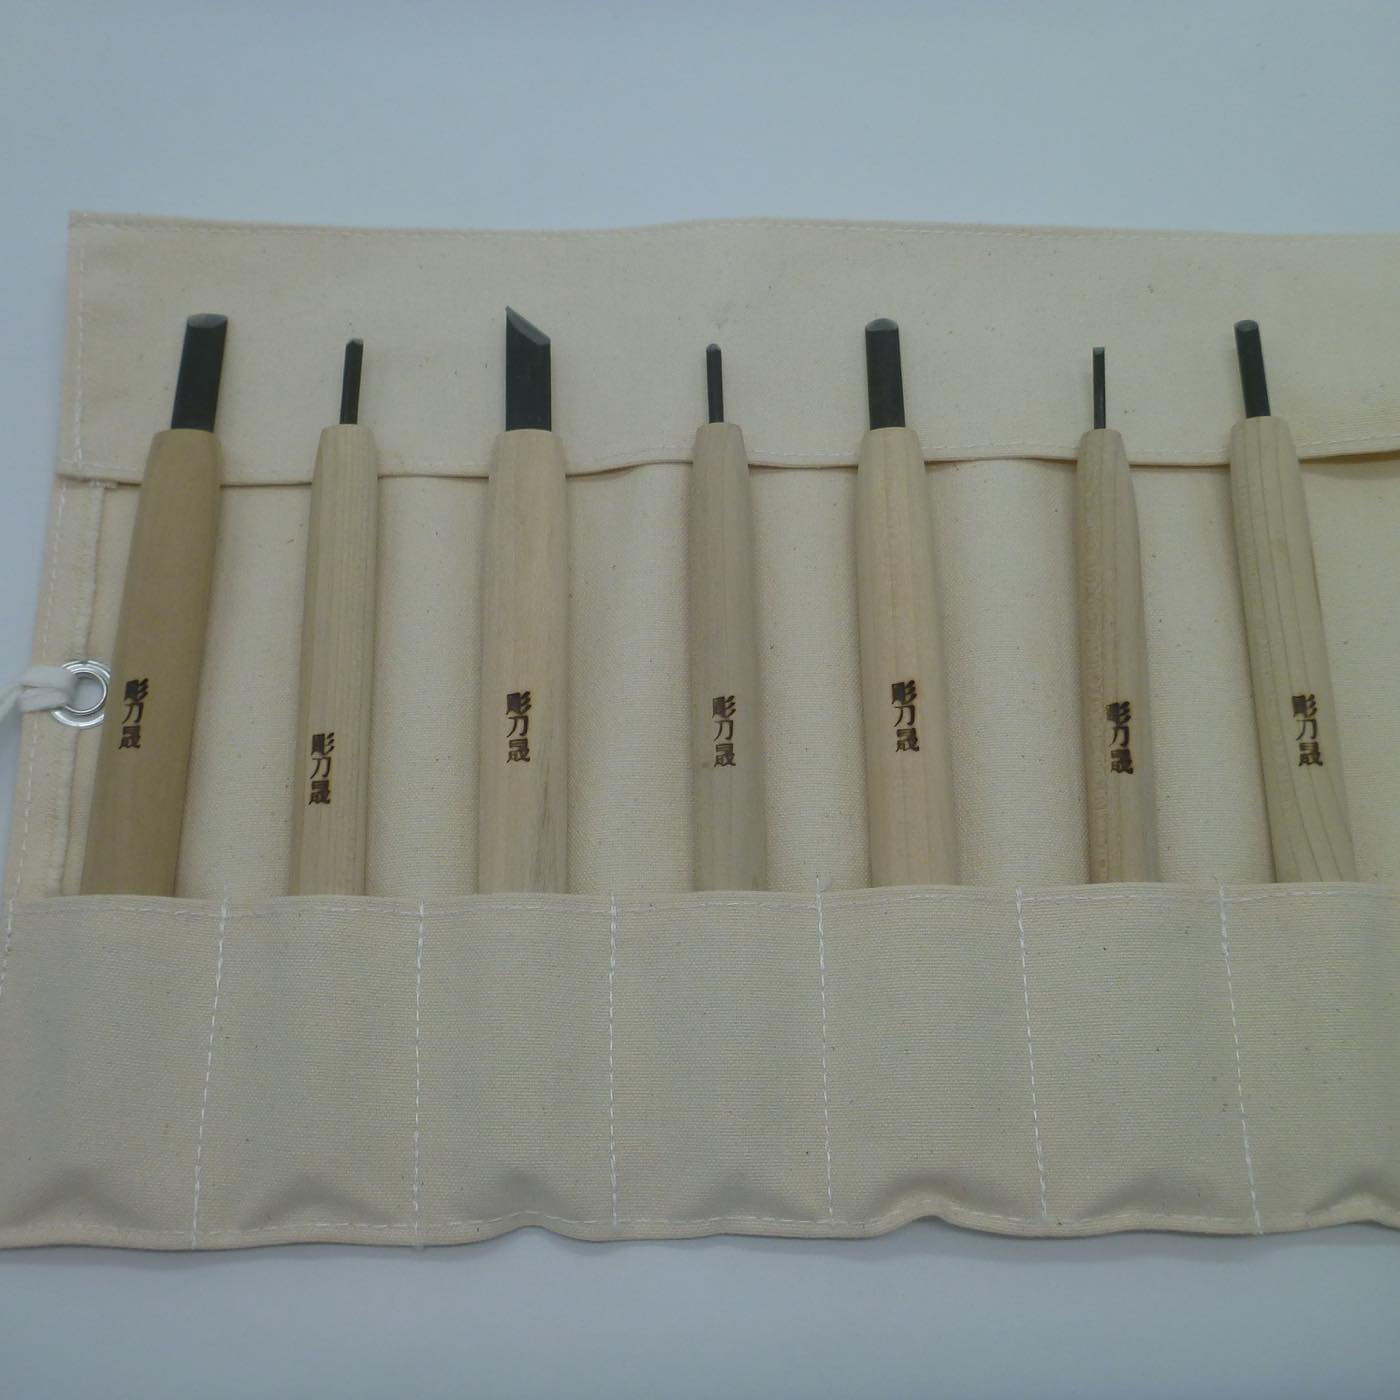 彫刻刀 彫刀晟 専門用 7本組 のみ巻入 小倉彫刻刃物製作所 hbox-exp02